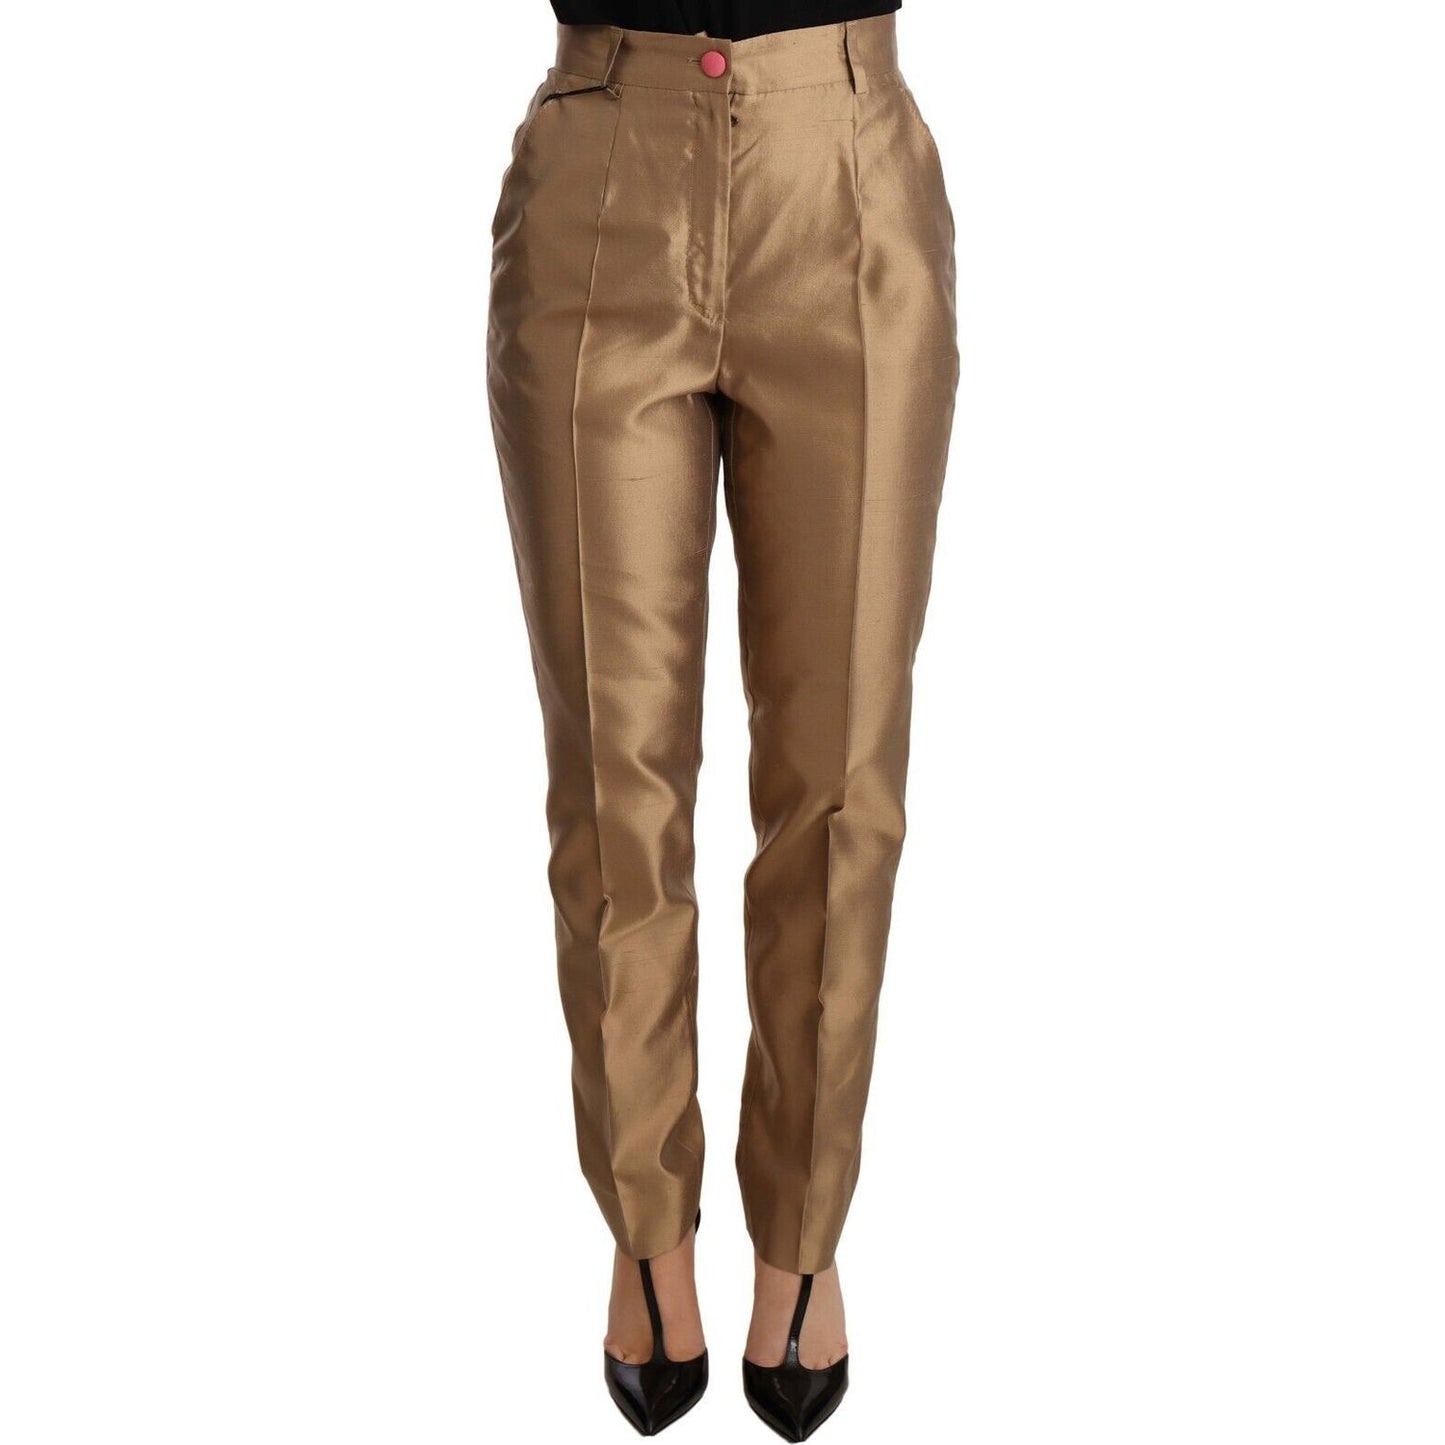 Dolce & Gabbana Elegant Tapered Silk Trousers in Gold Jeans & Pants gold-silk-tapered-trouser-metallic-pants